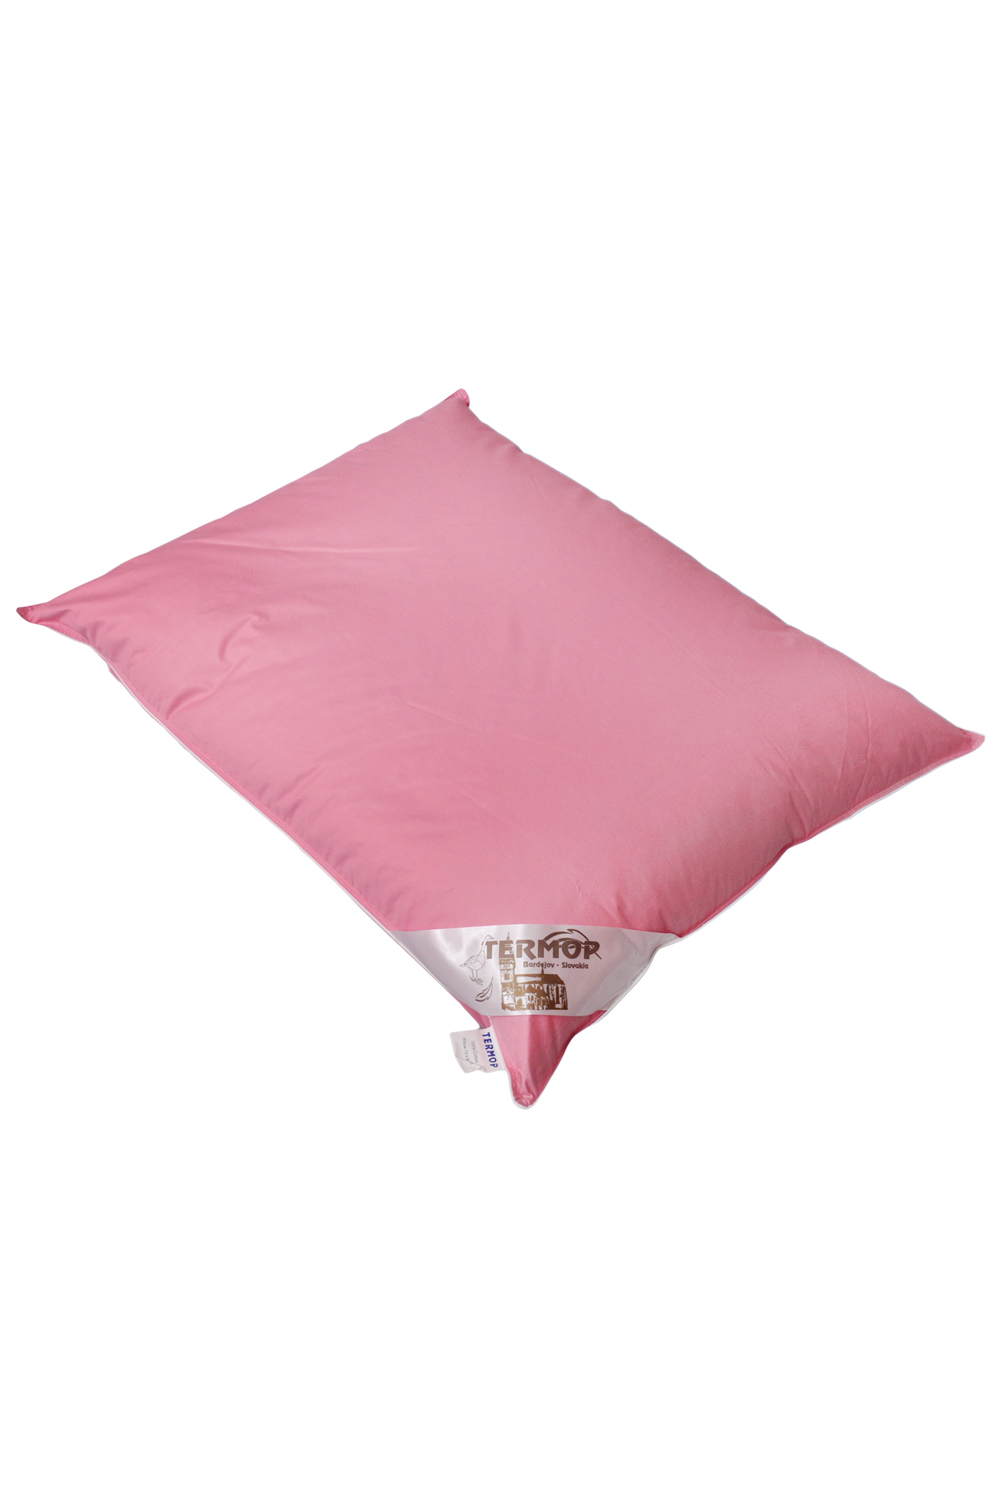 Vankúš TERMOP Premium - ružový 50x70